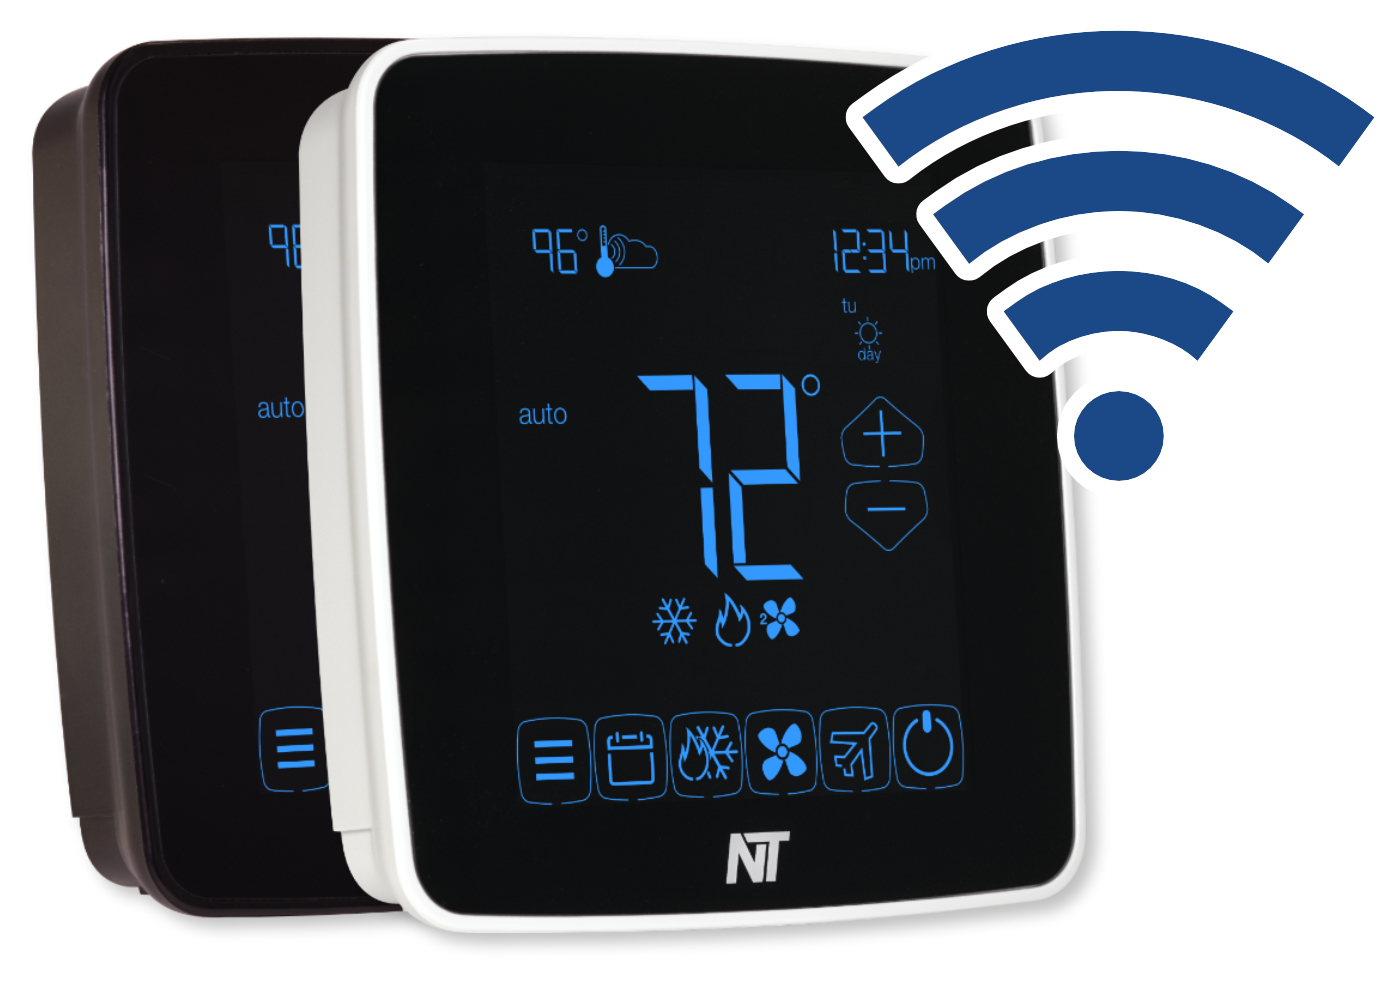 NetX Wi-Fi Thermostats